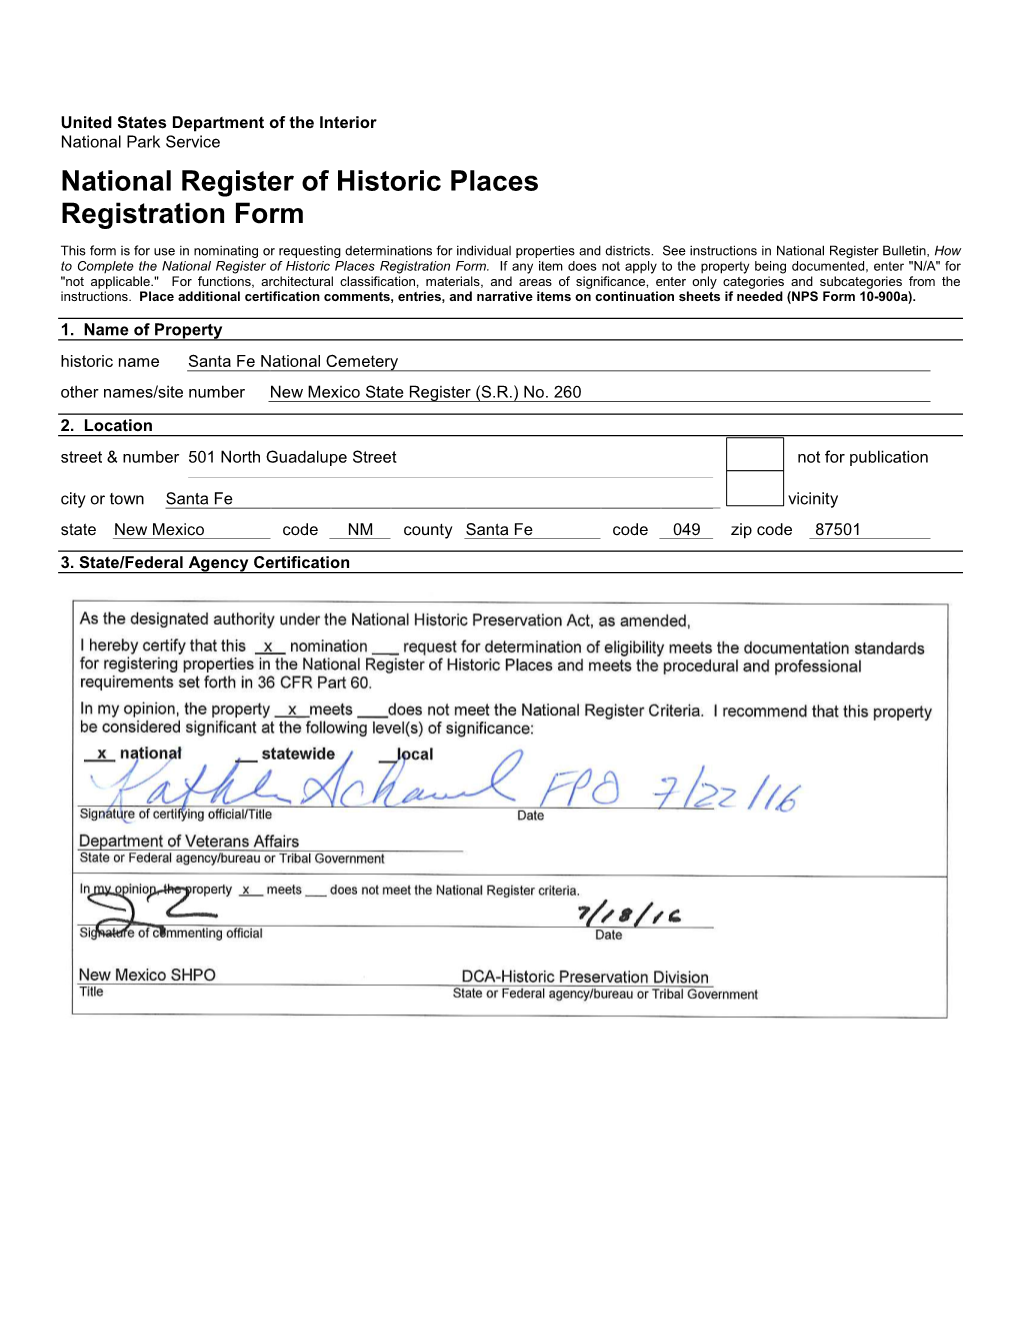 Santa Fe National Cemetery National Register Nomination